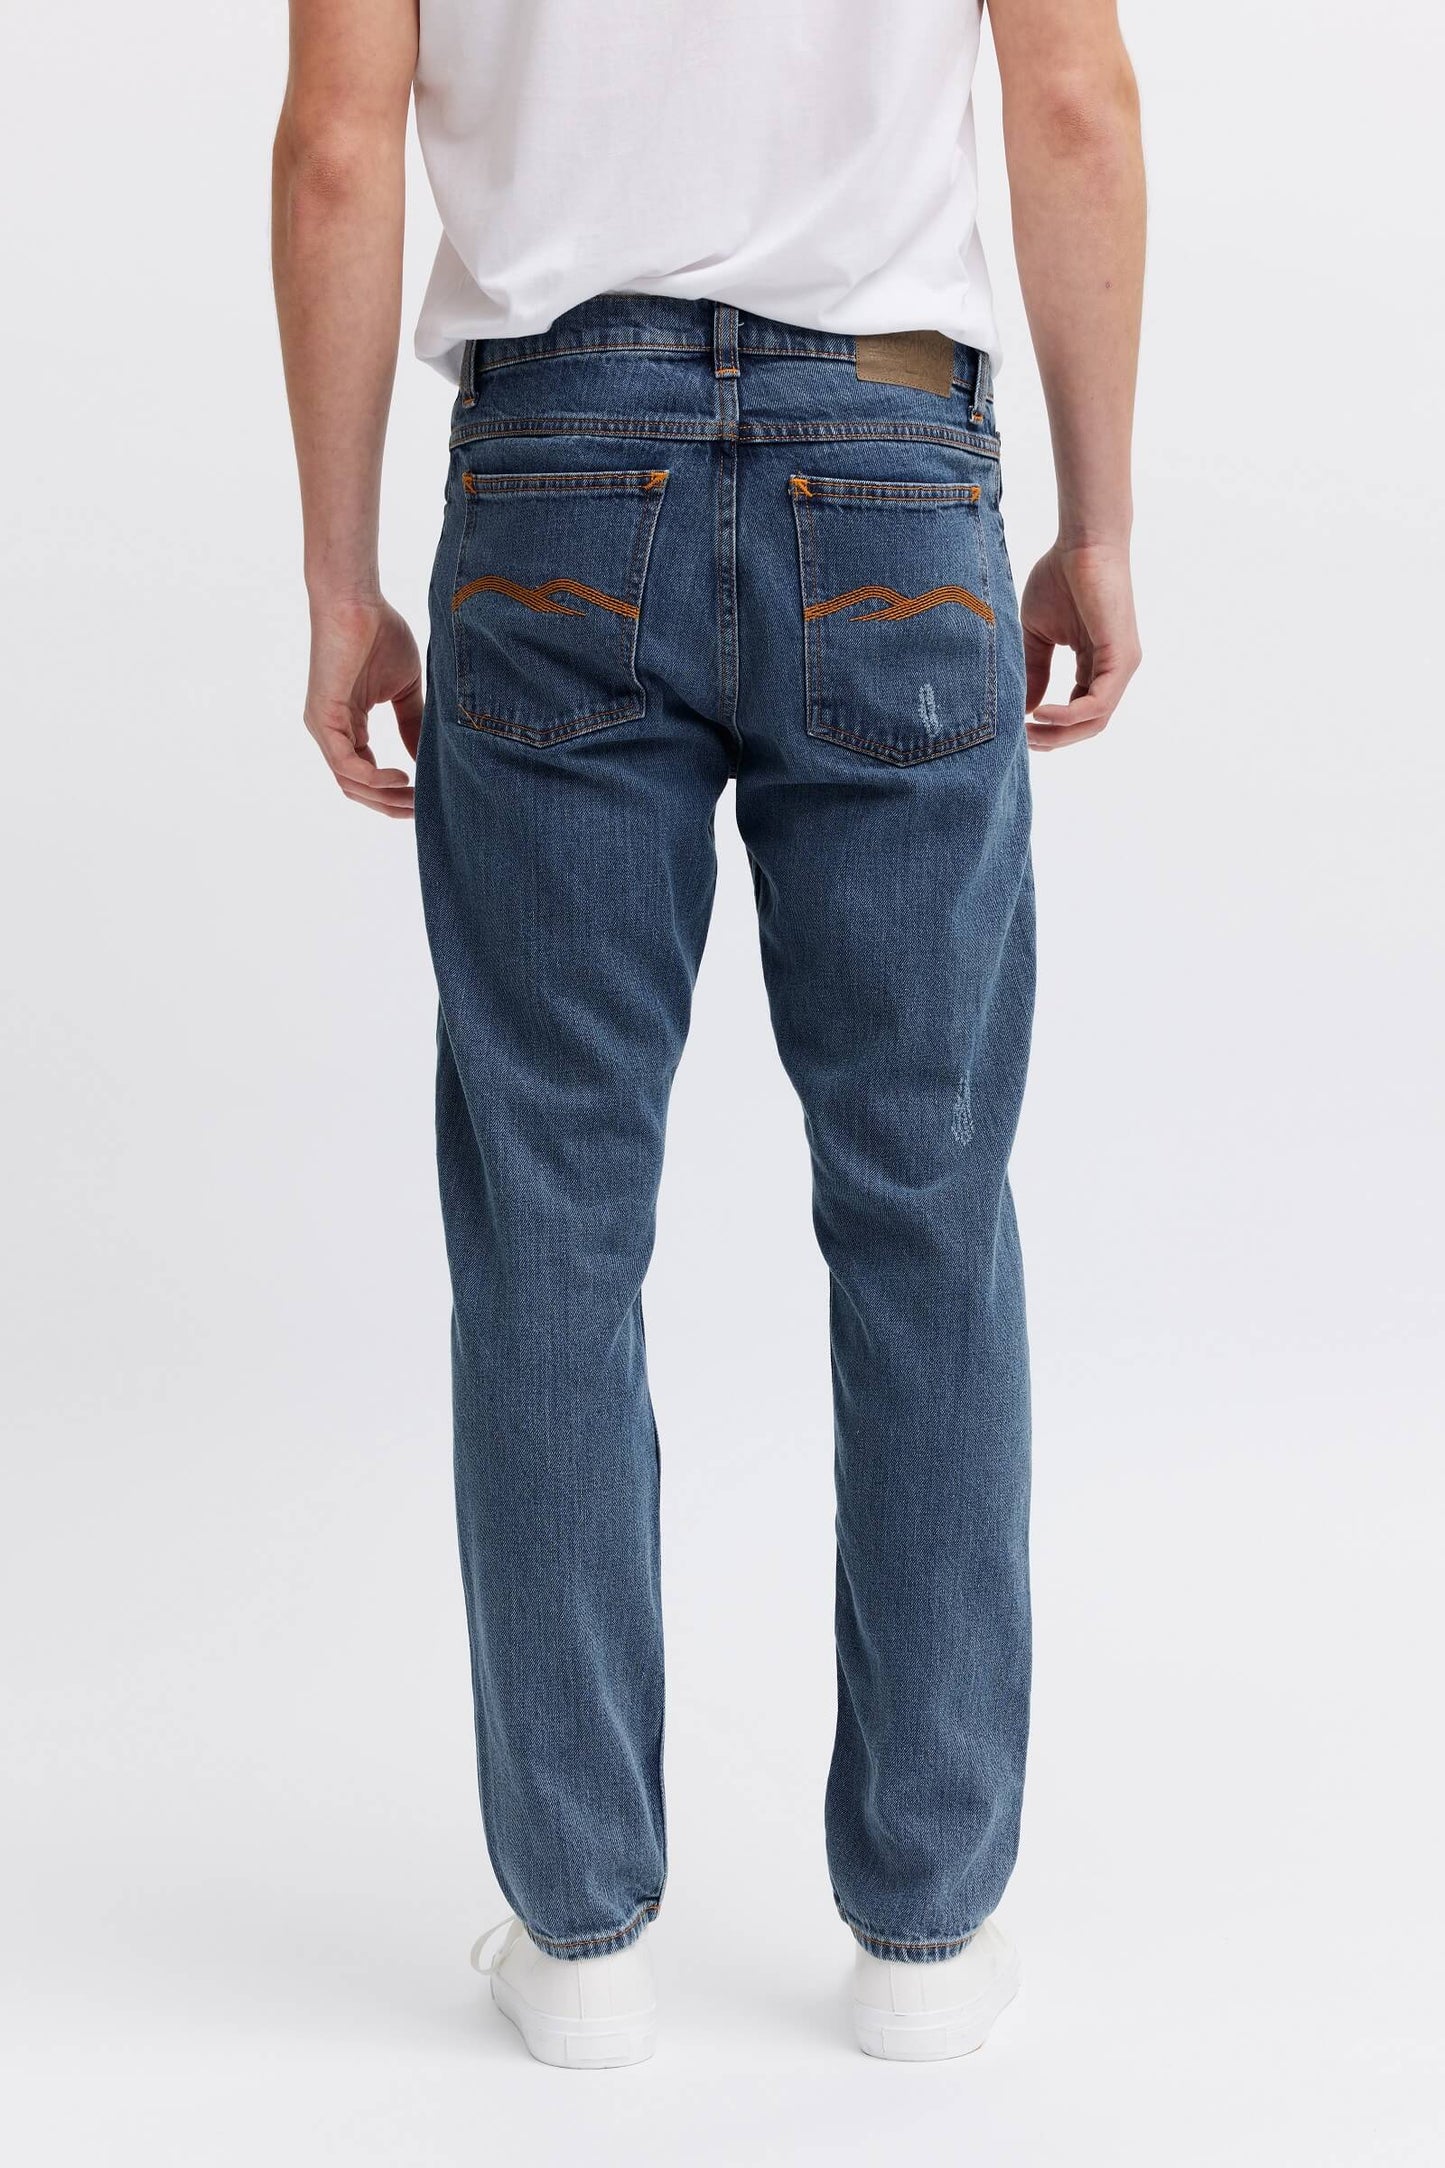 Organic cotton jeans